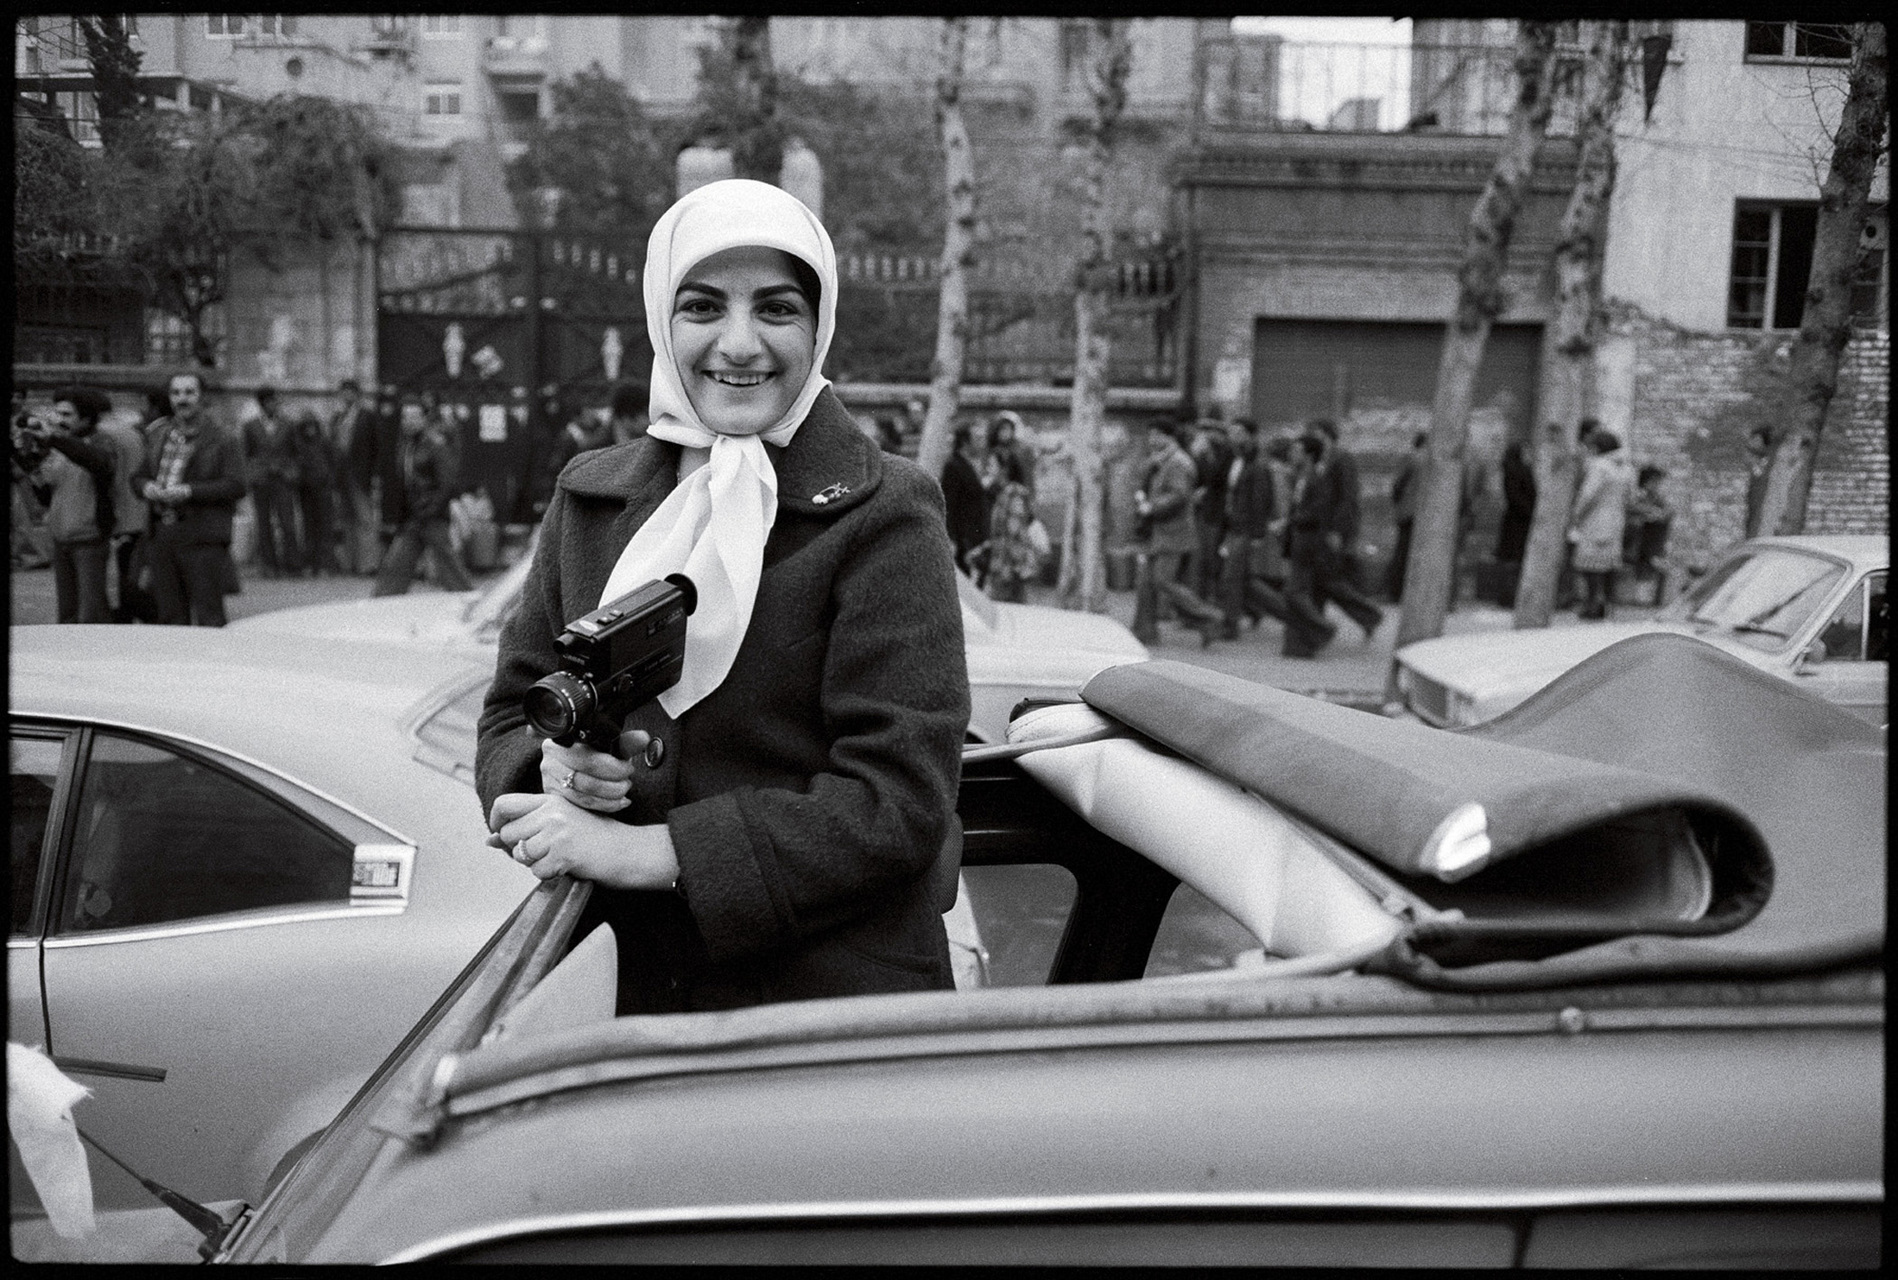 Briefly, the streets of Tehran are full of joy. : 44 Days: the Iranian Revolution : David Burnett | Photographer